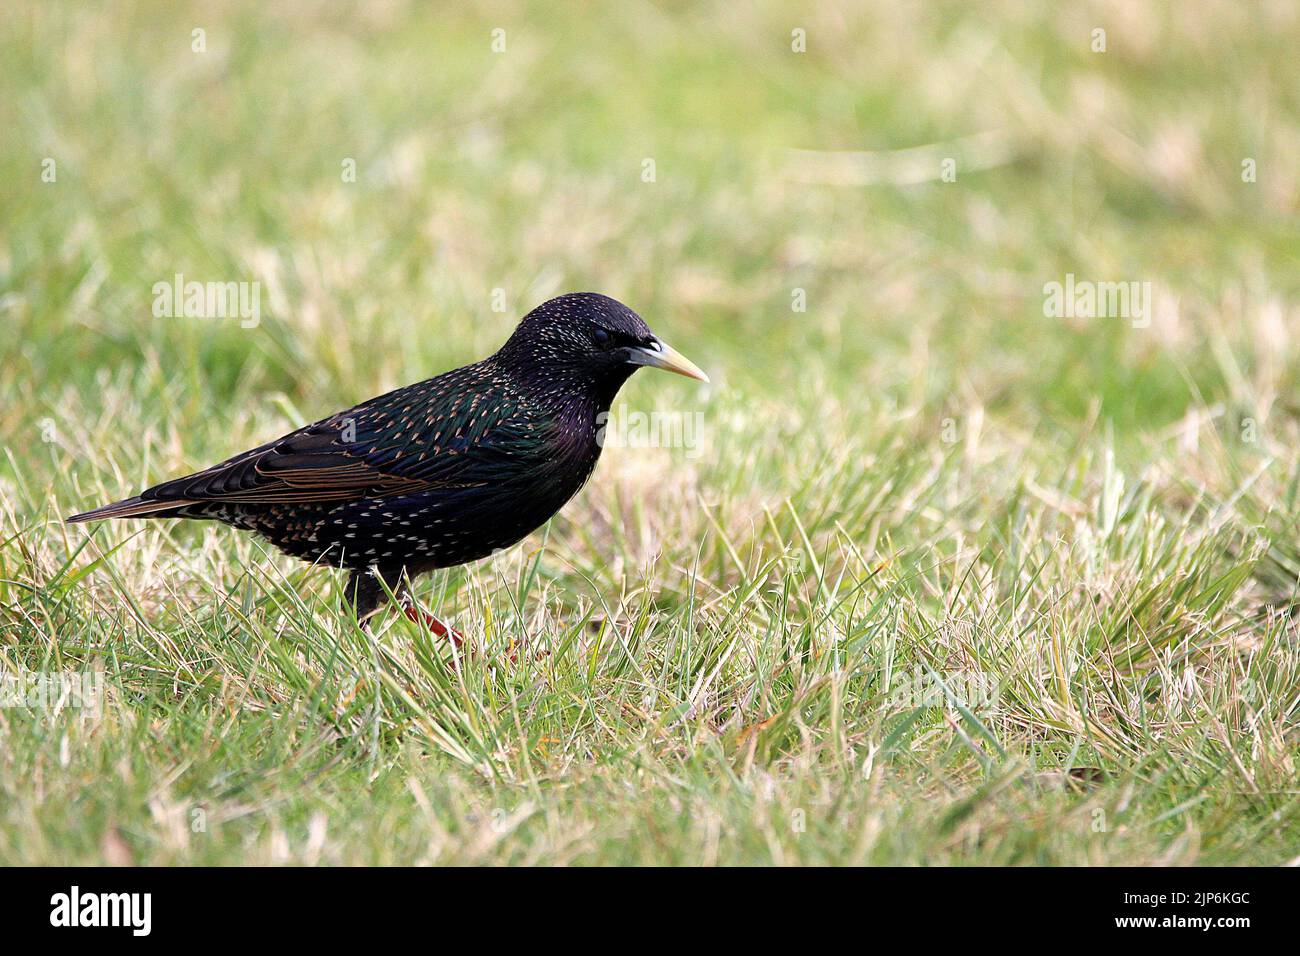 European starling (Sturnus vulgaris) on grass Stock Photo